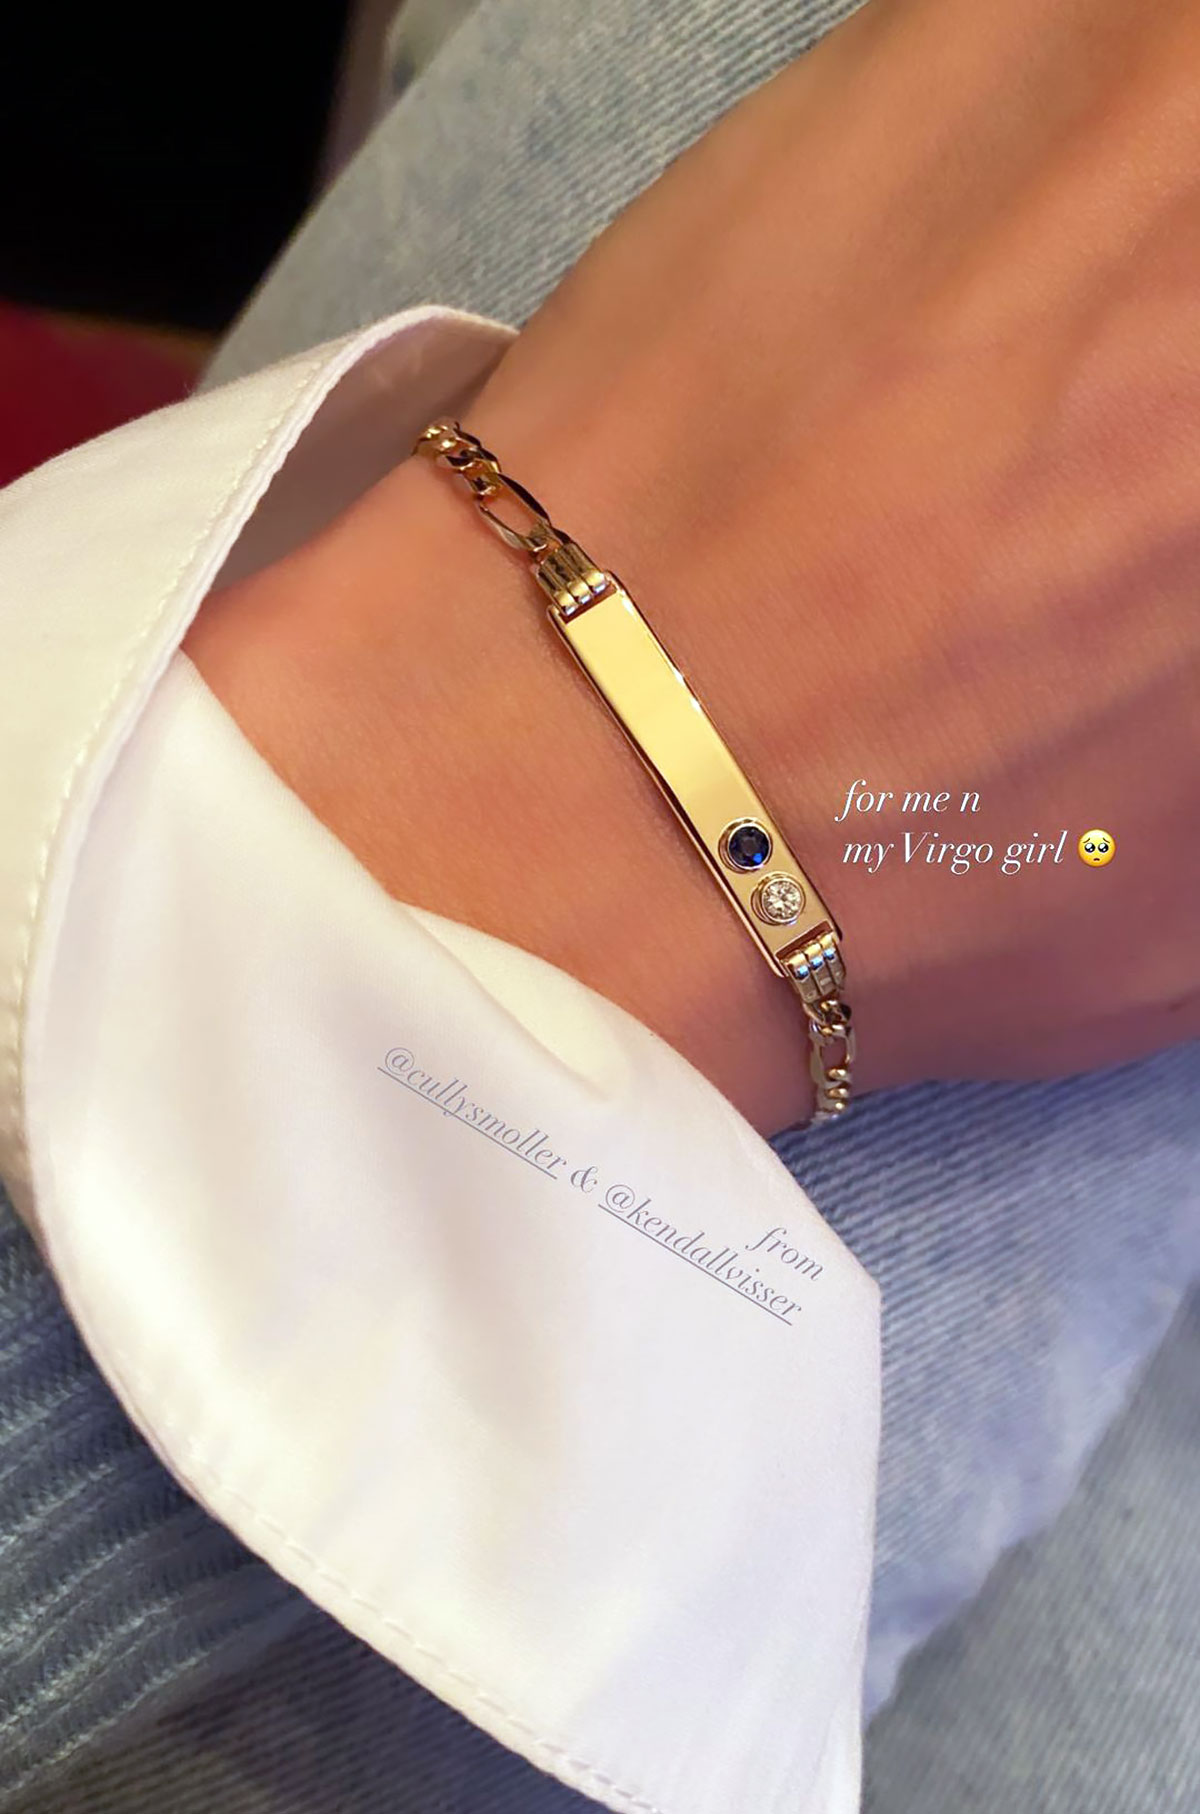 Gigi Hadid's Birthstone Bracelet in Honor of Her 'Virgo Girl